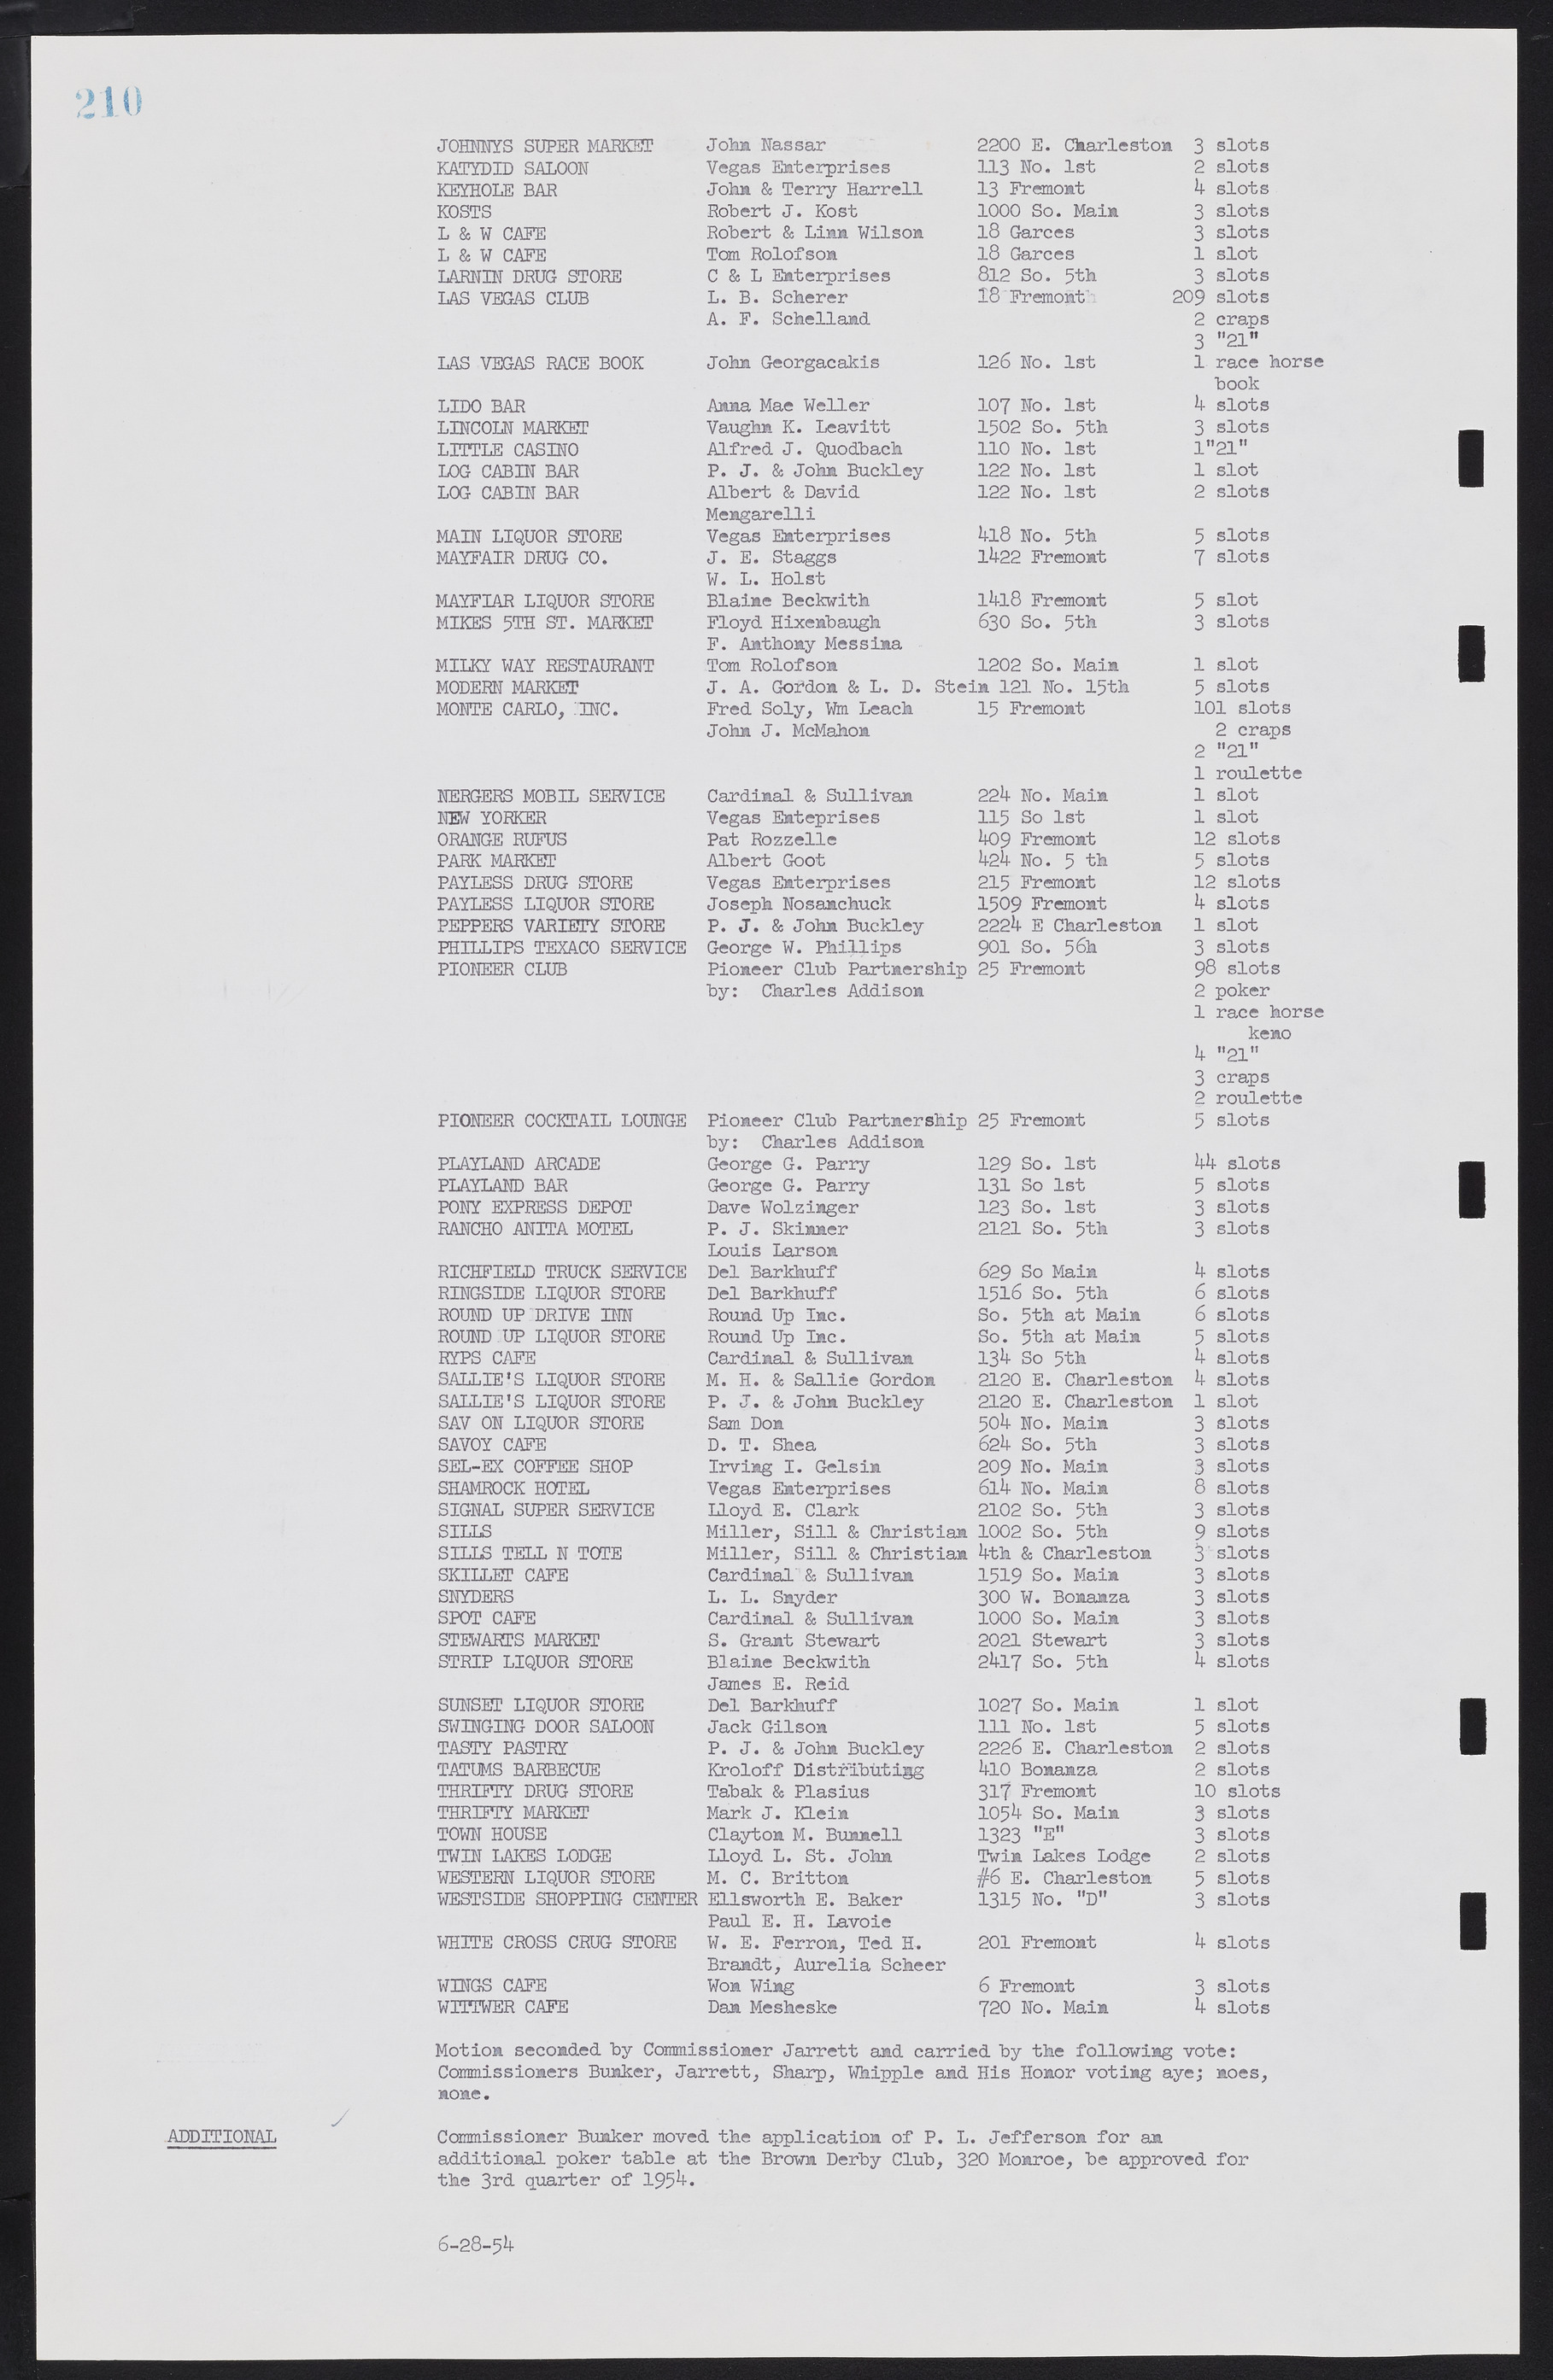 Las Vegas City Commission Minutes, February 17, 1954 to September 21, 1955, lvc000009-216